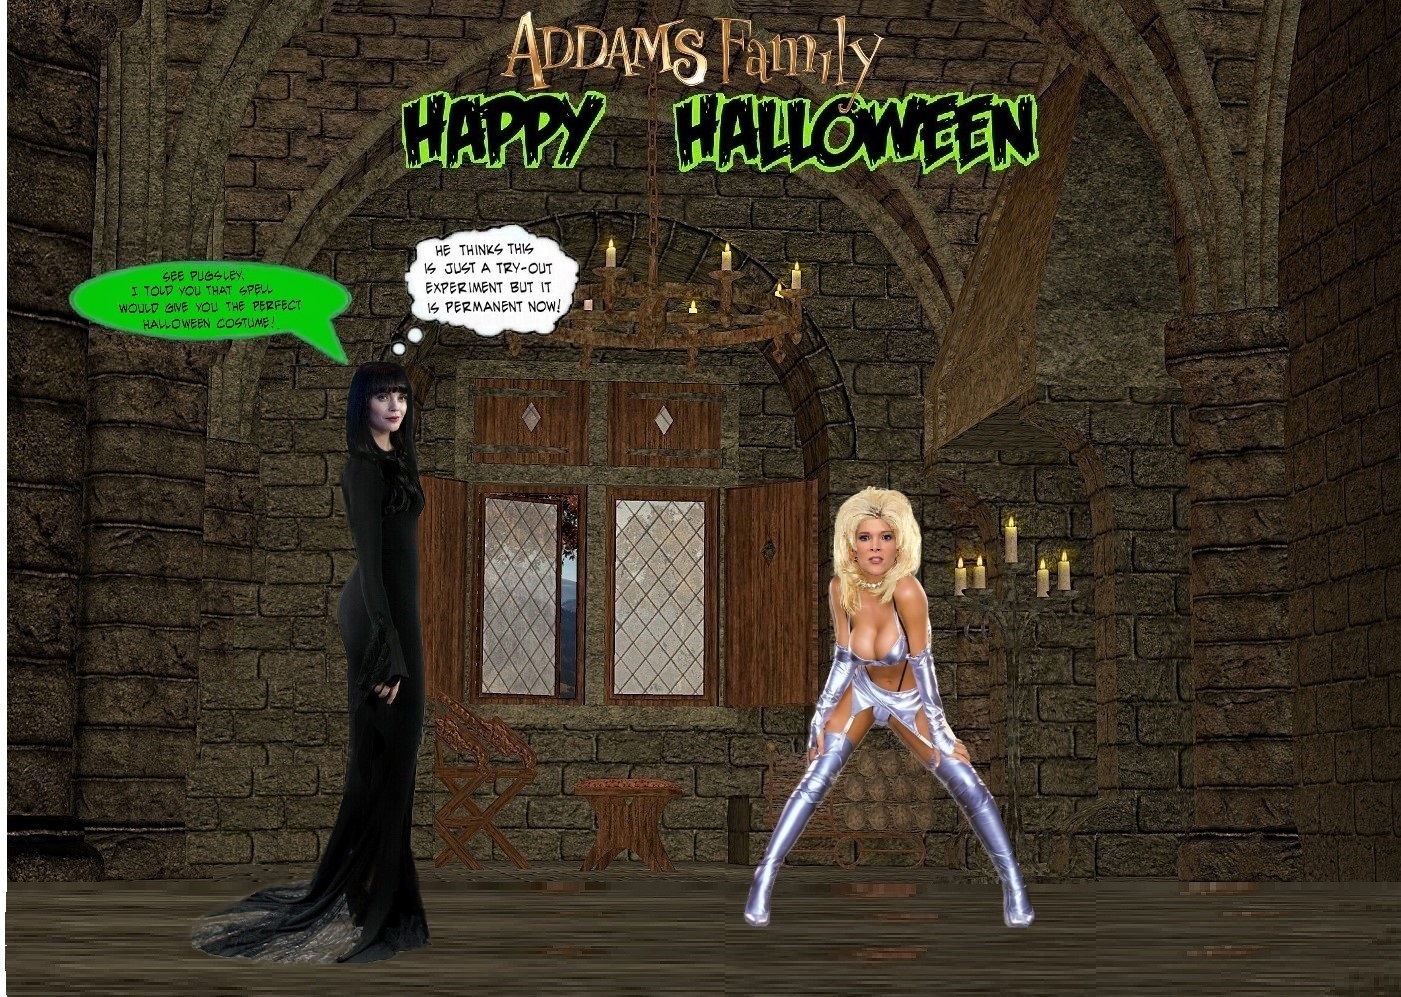  Happy Halloween Wednesday & Pugsley Adams (Getting Ready)